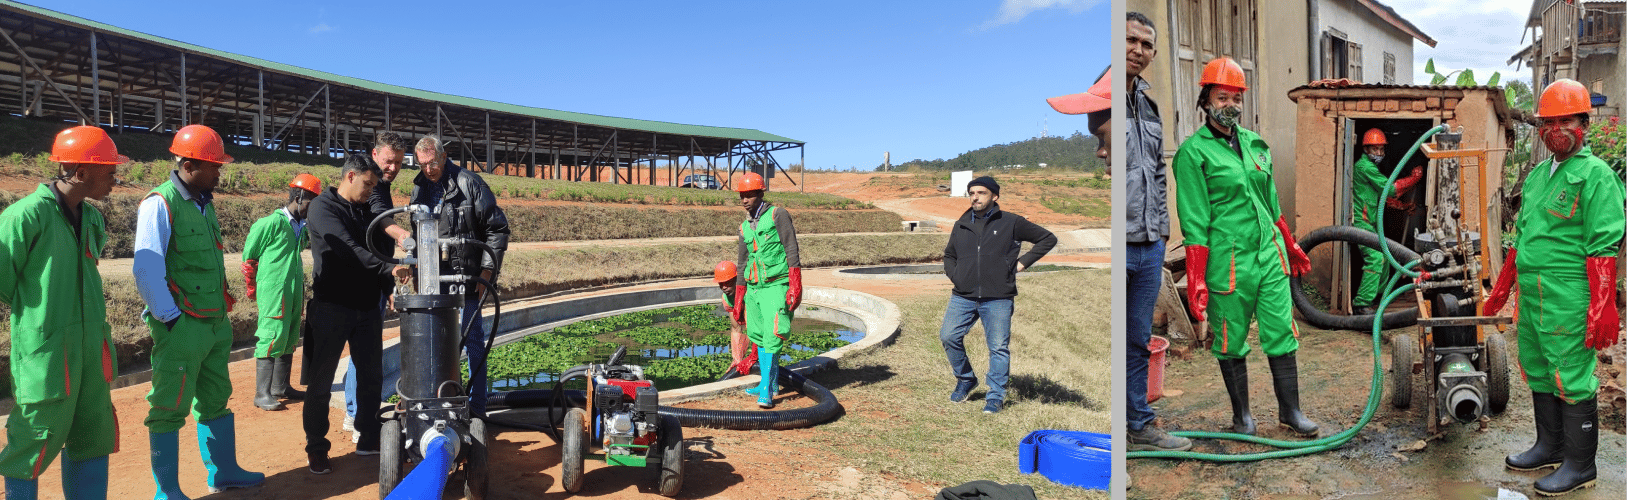 PuPu pump being used to transfert sludge in the Fianarantsoa treatment plant in Madagascar